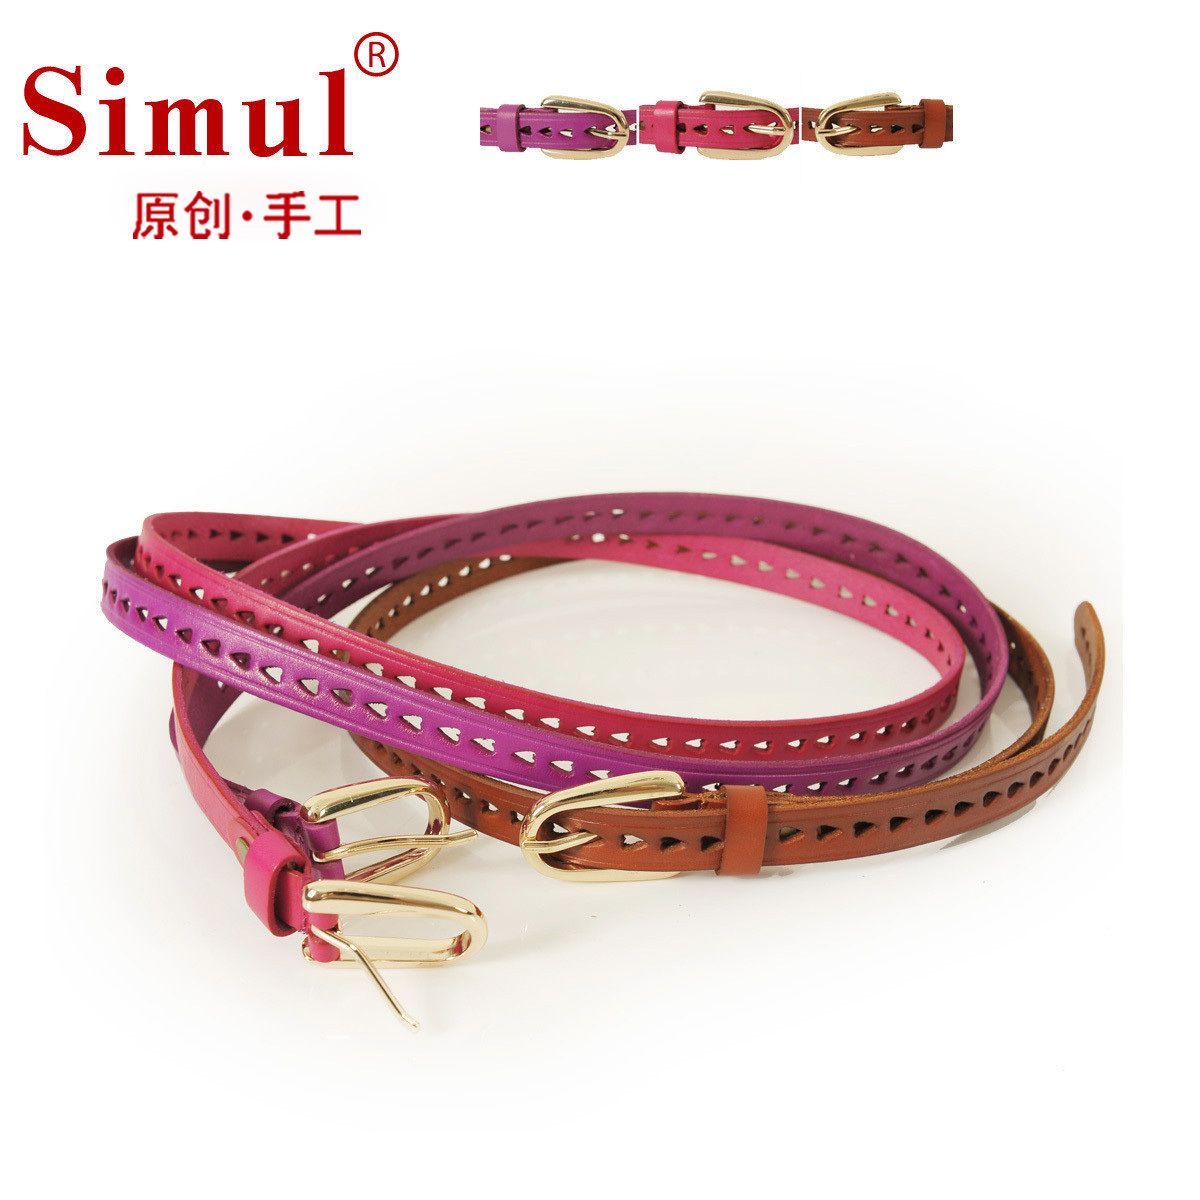 Simul fashion women's genuine leather belt saddle leather s11f02